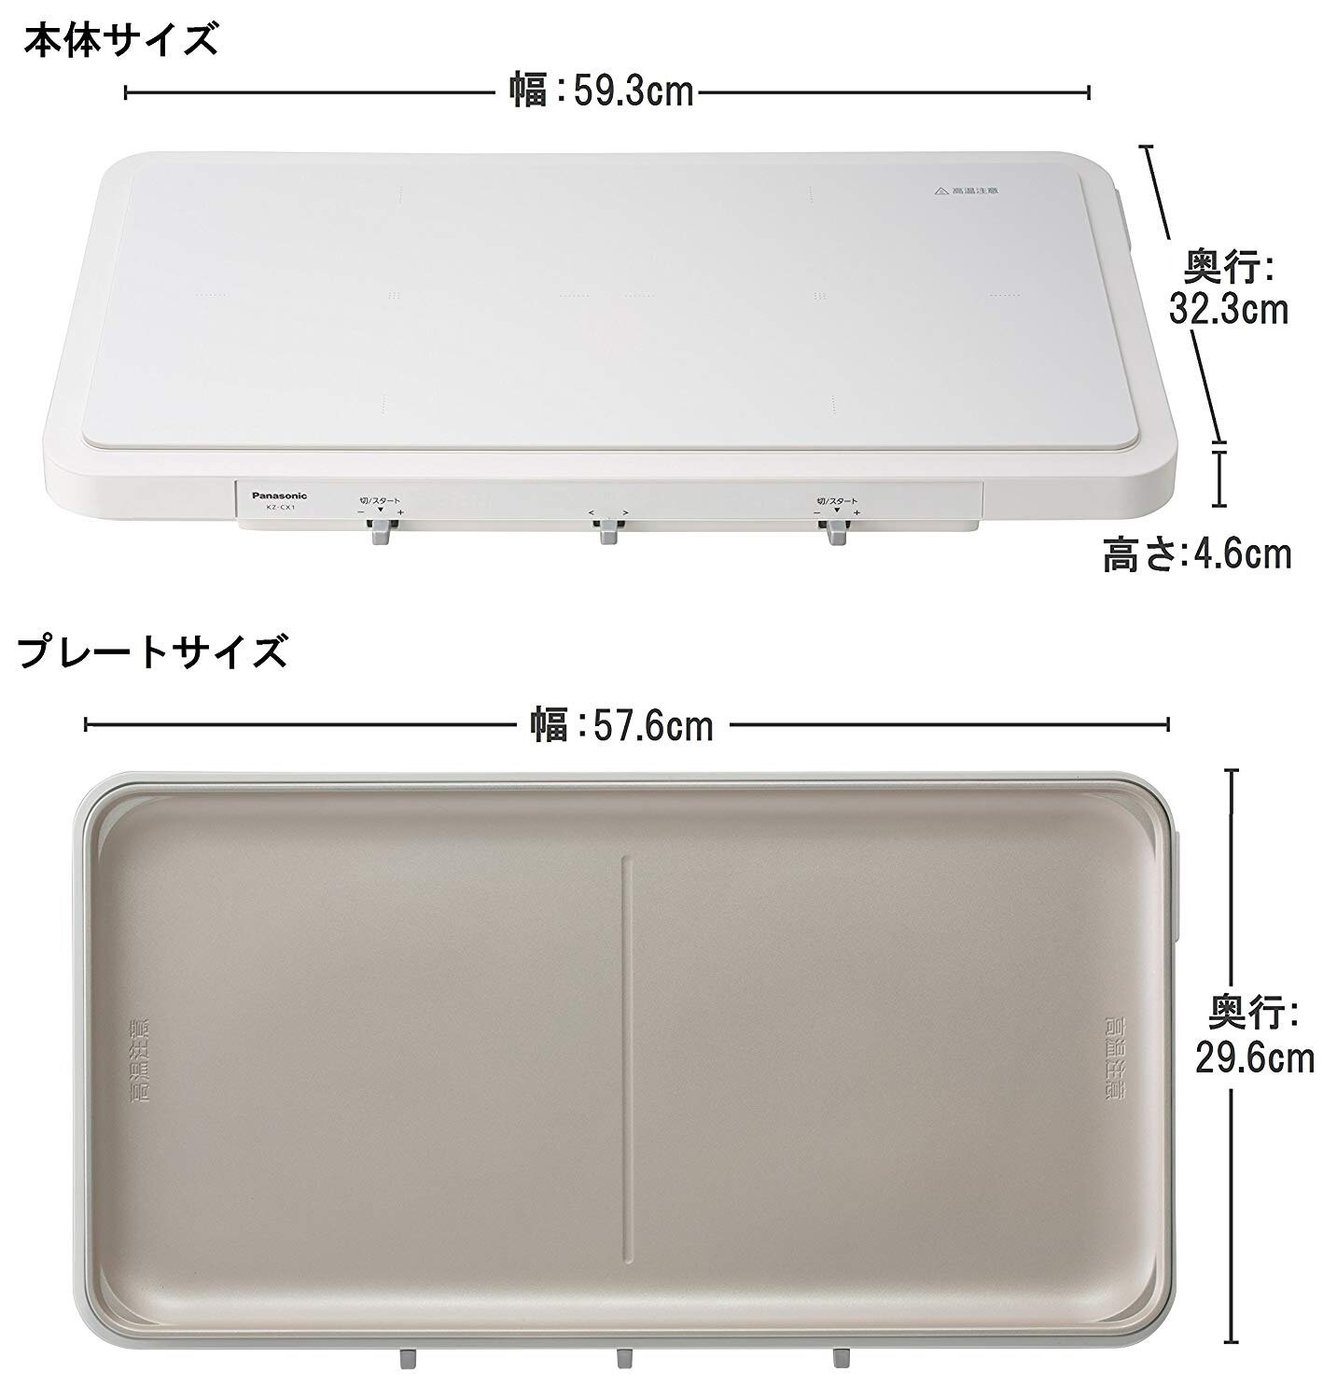 JP.com】日本代購PANASONIC KZ-CX1-W 雙口IH電磁爐IH調理爐電烤盤 